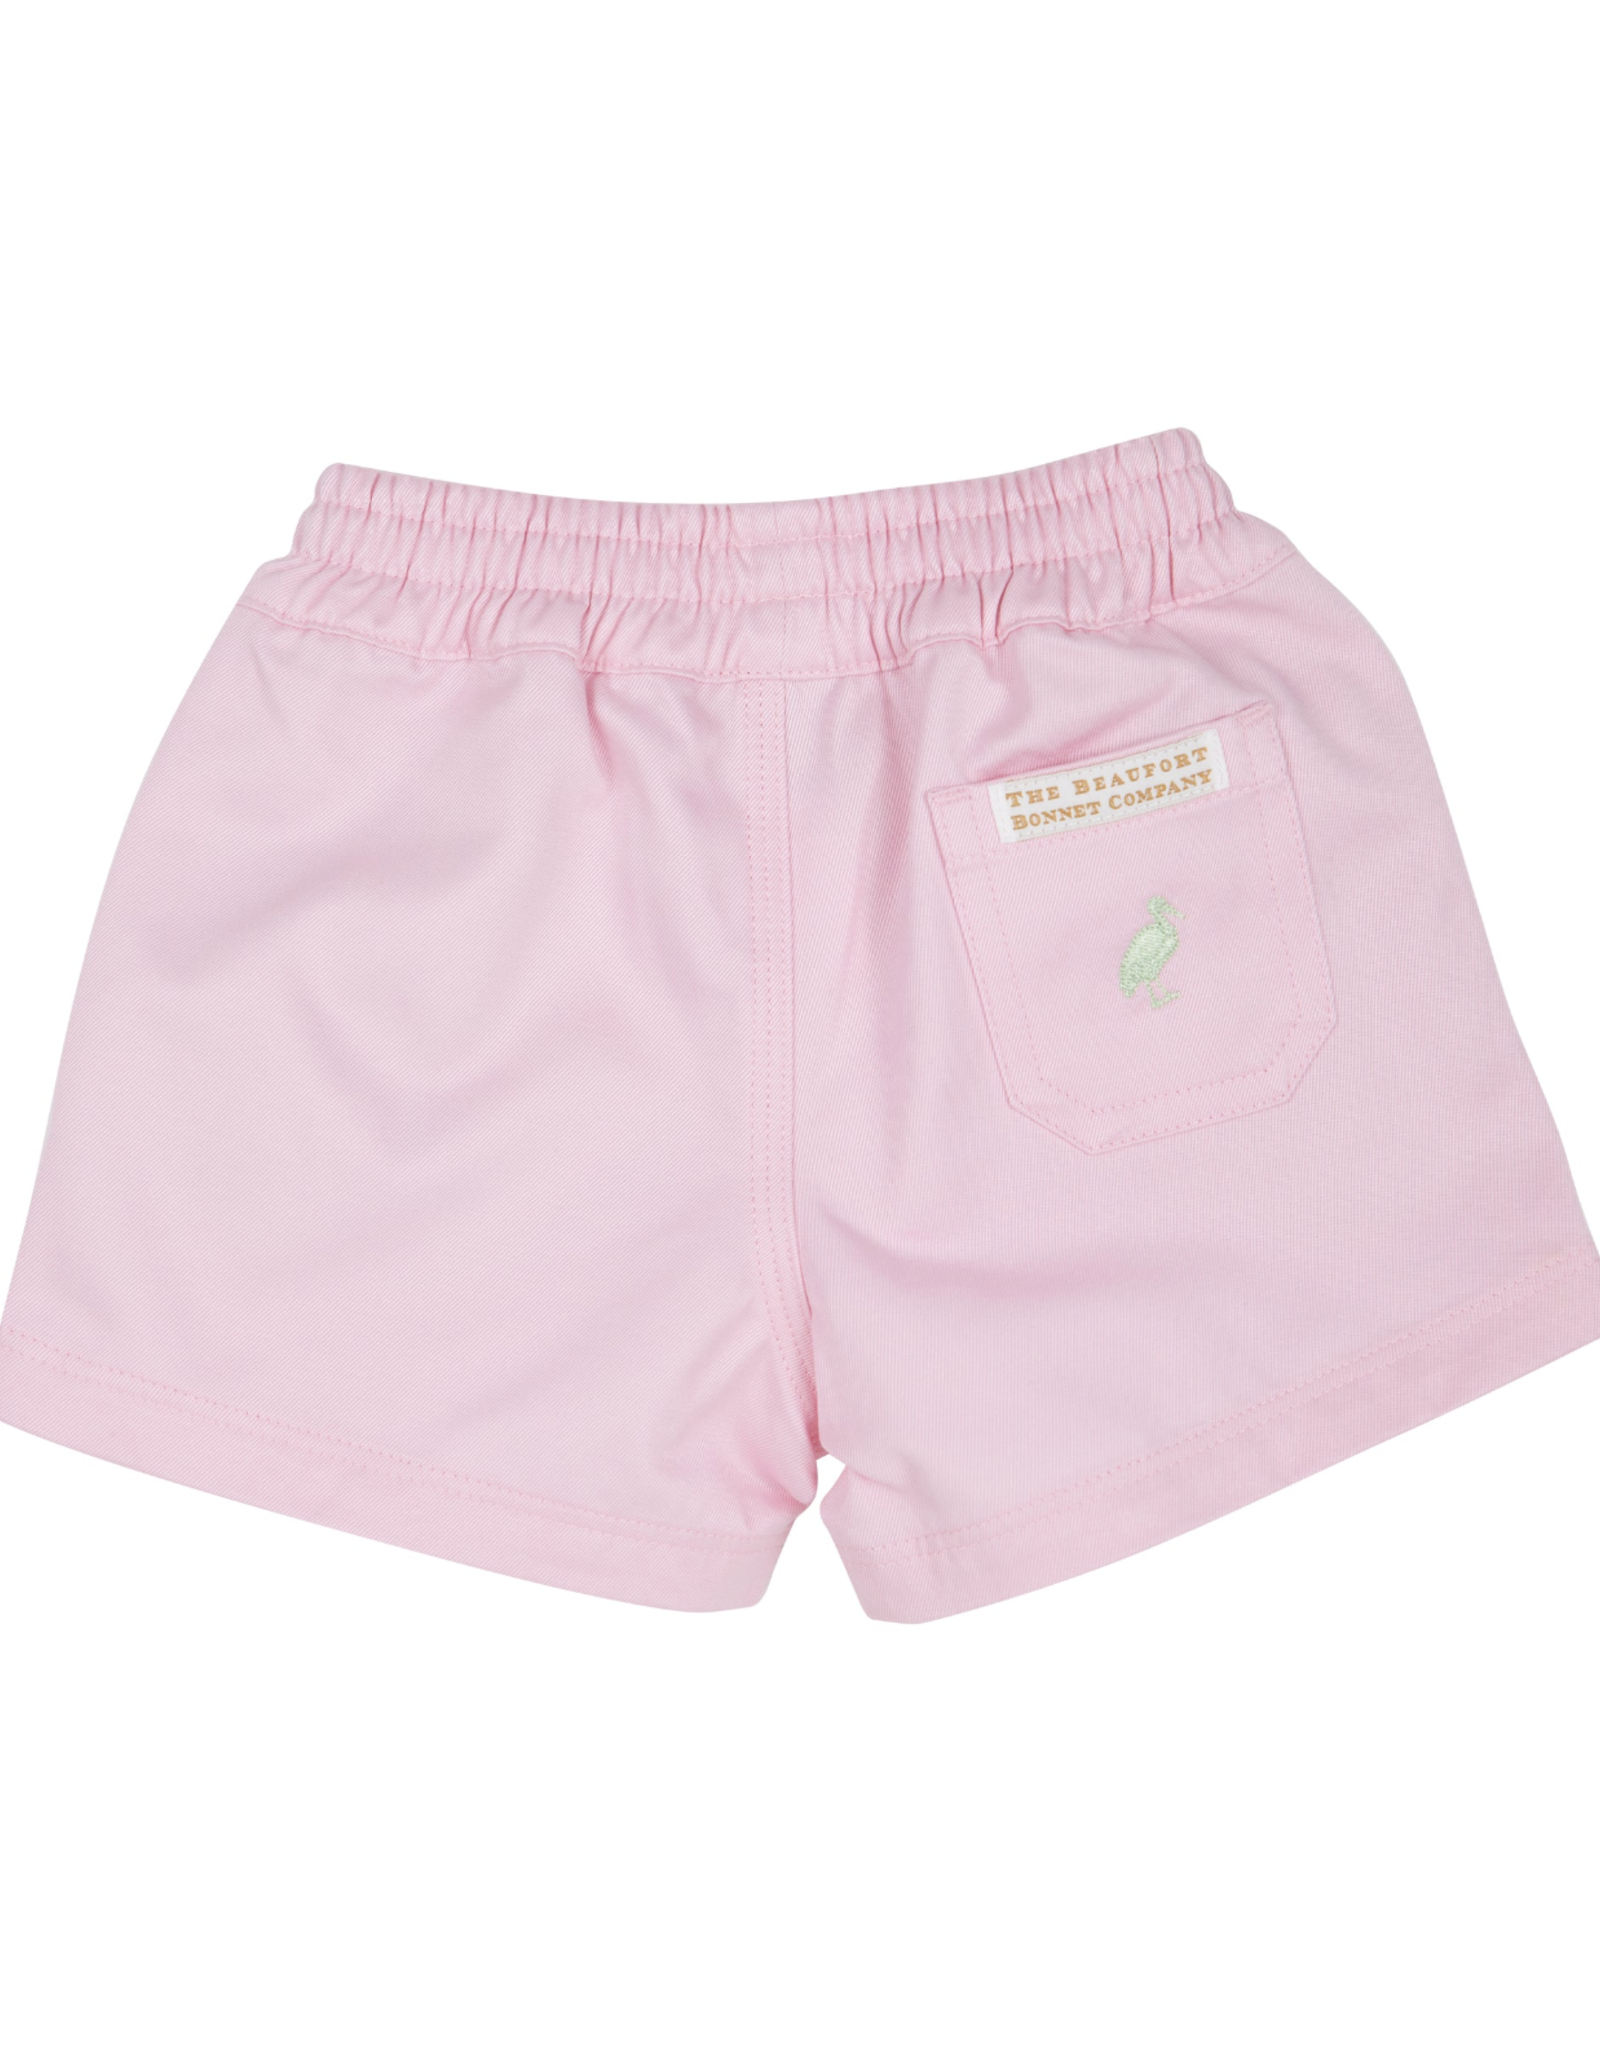 TBBC Sheffield Shorts Palm Beach Pink/Mandeville Mint